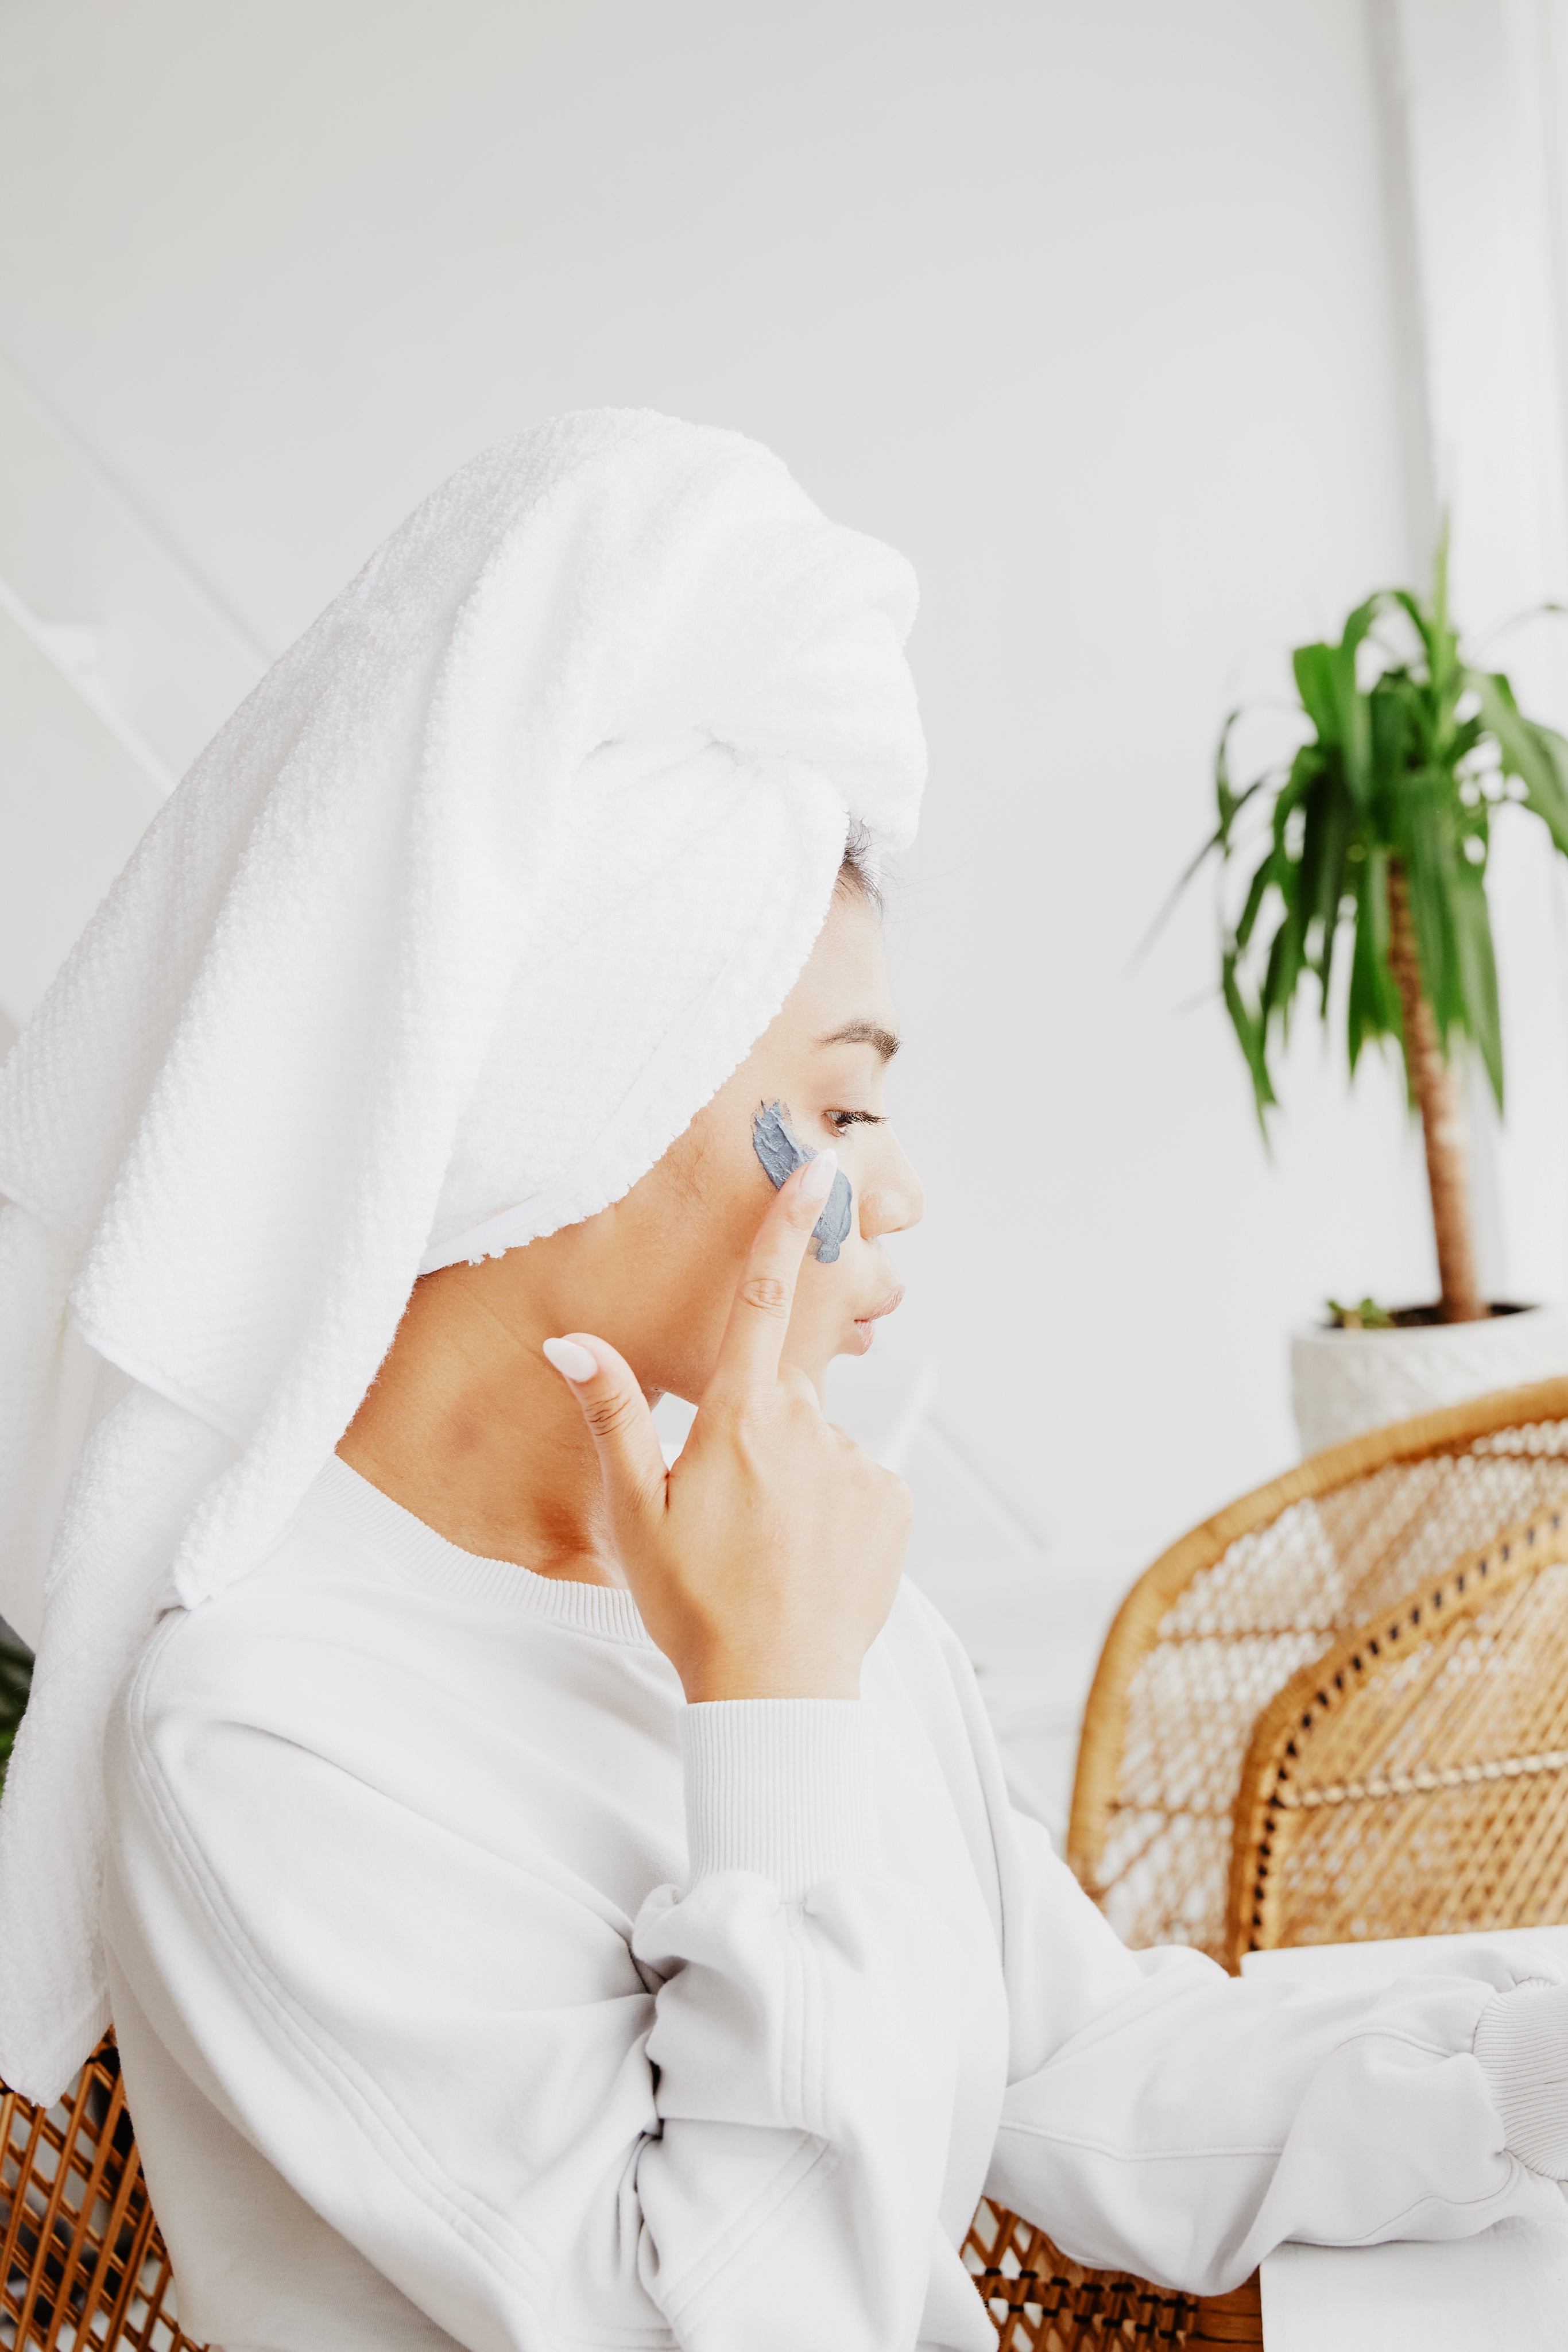 A woman wearing a white towel applying facial moisturizer. 